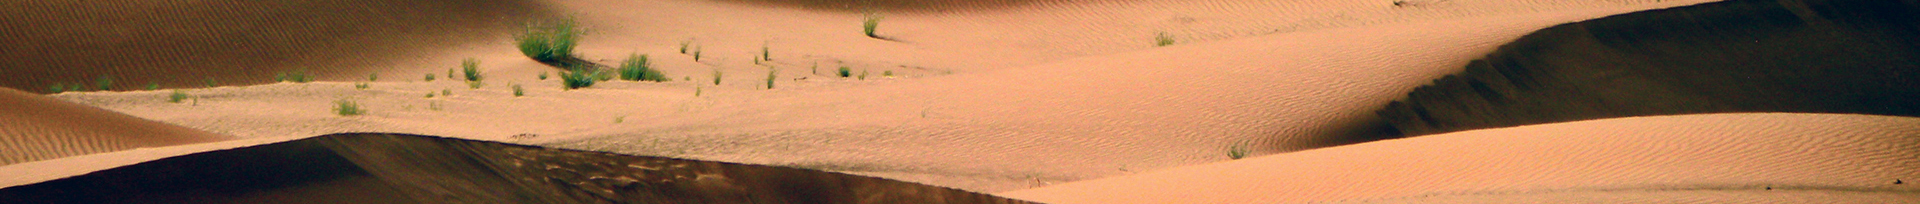 Dune Banner